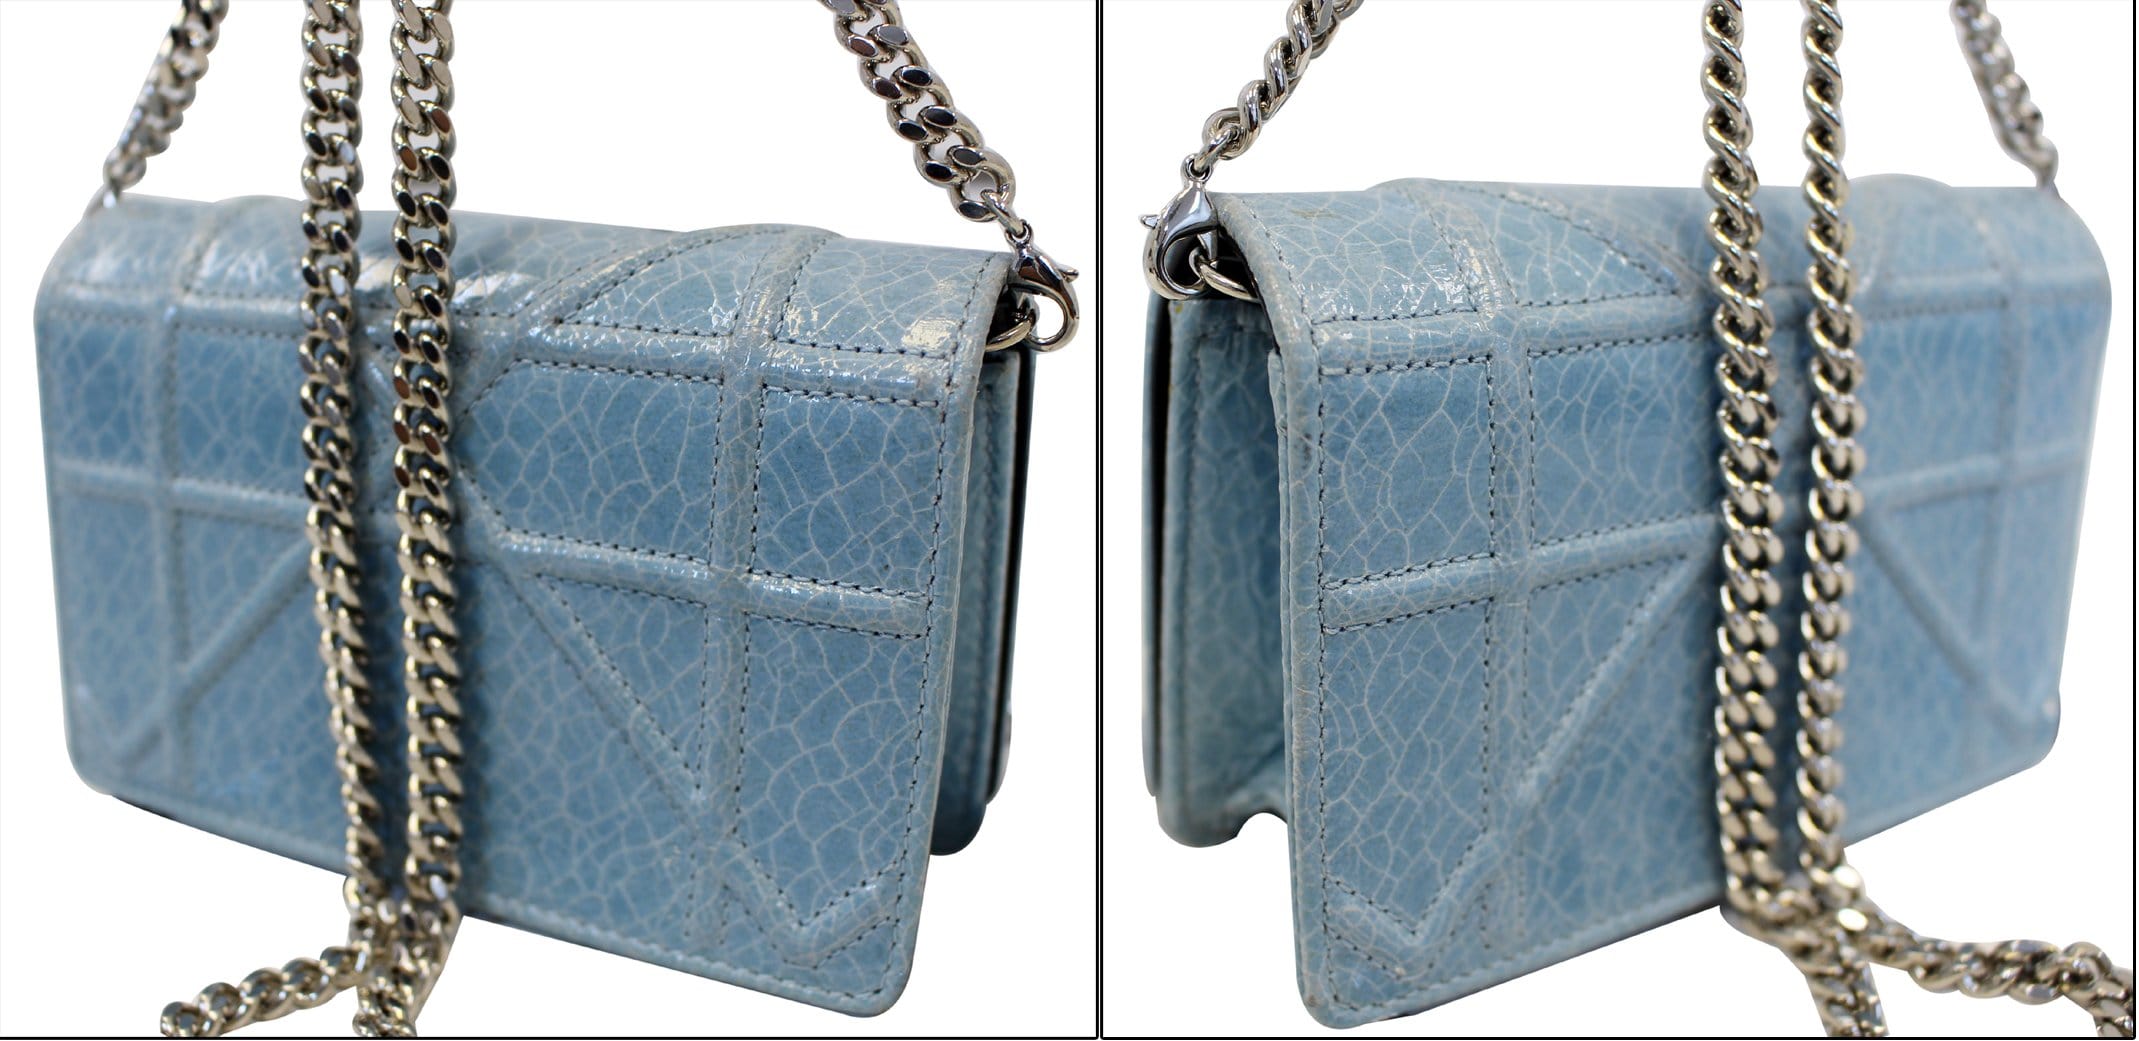 Dior Metallic Diorama Shoulder Bag